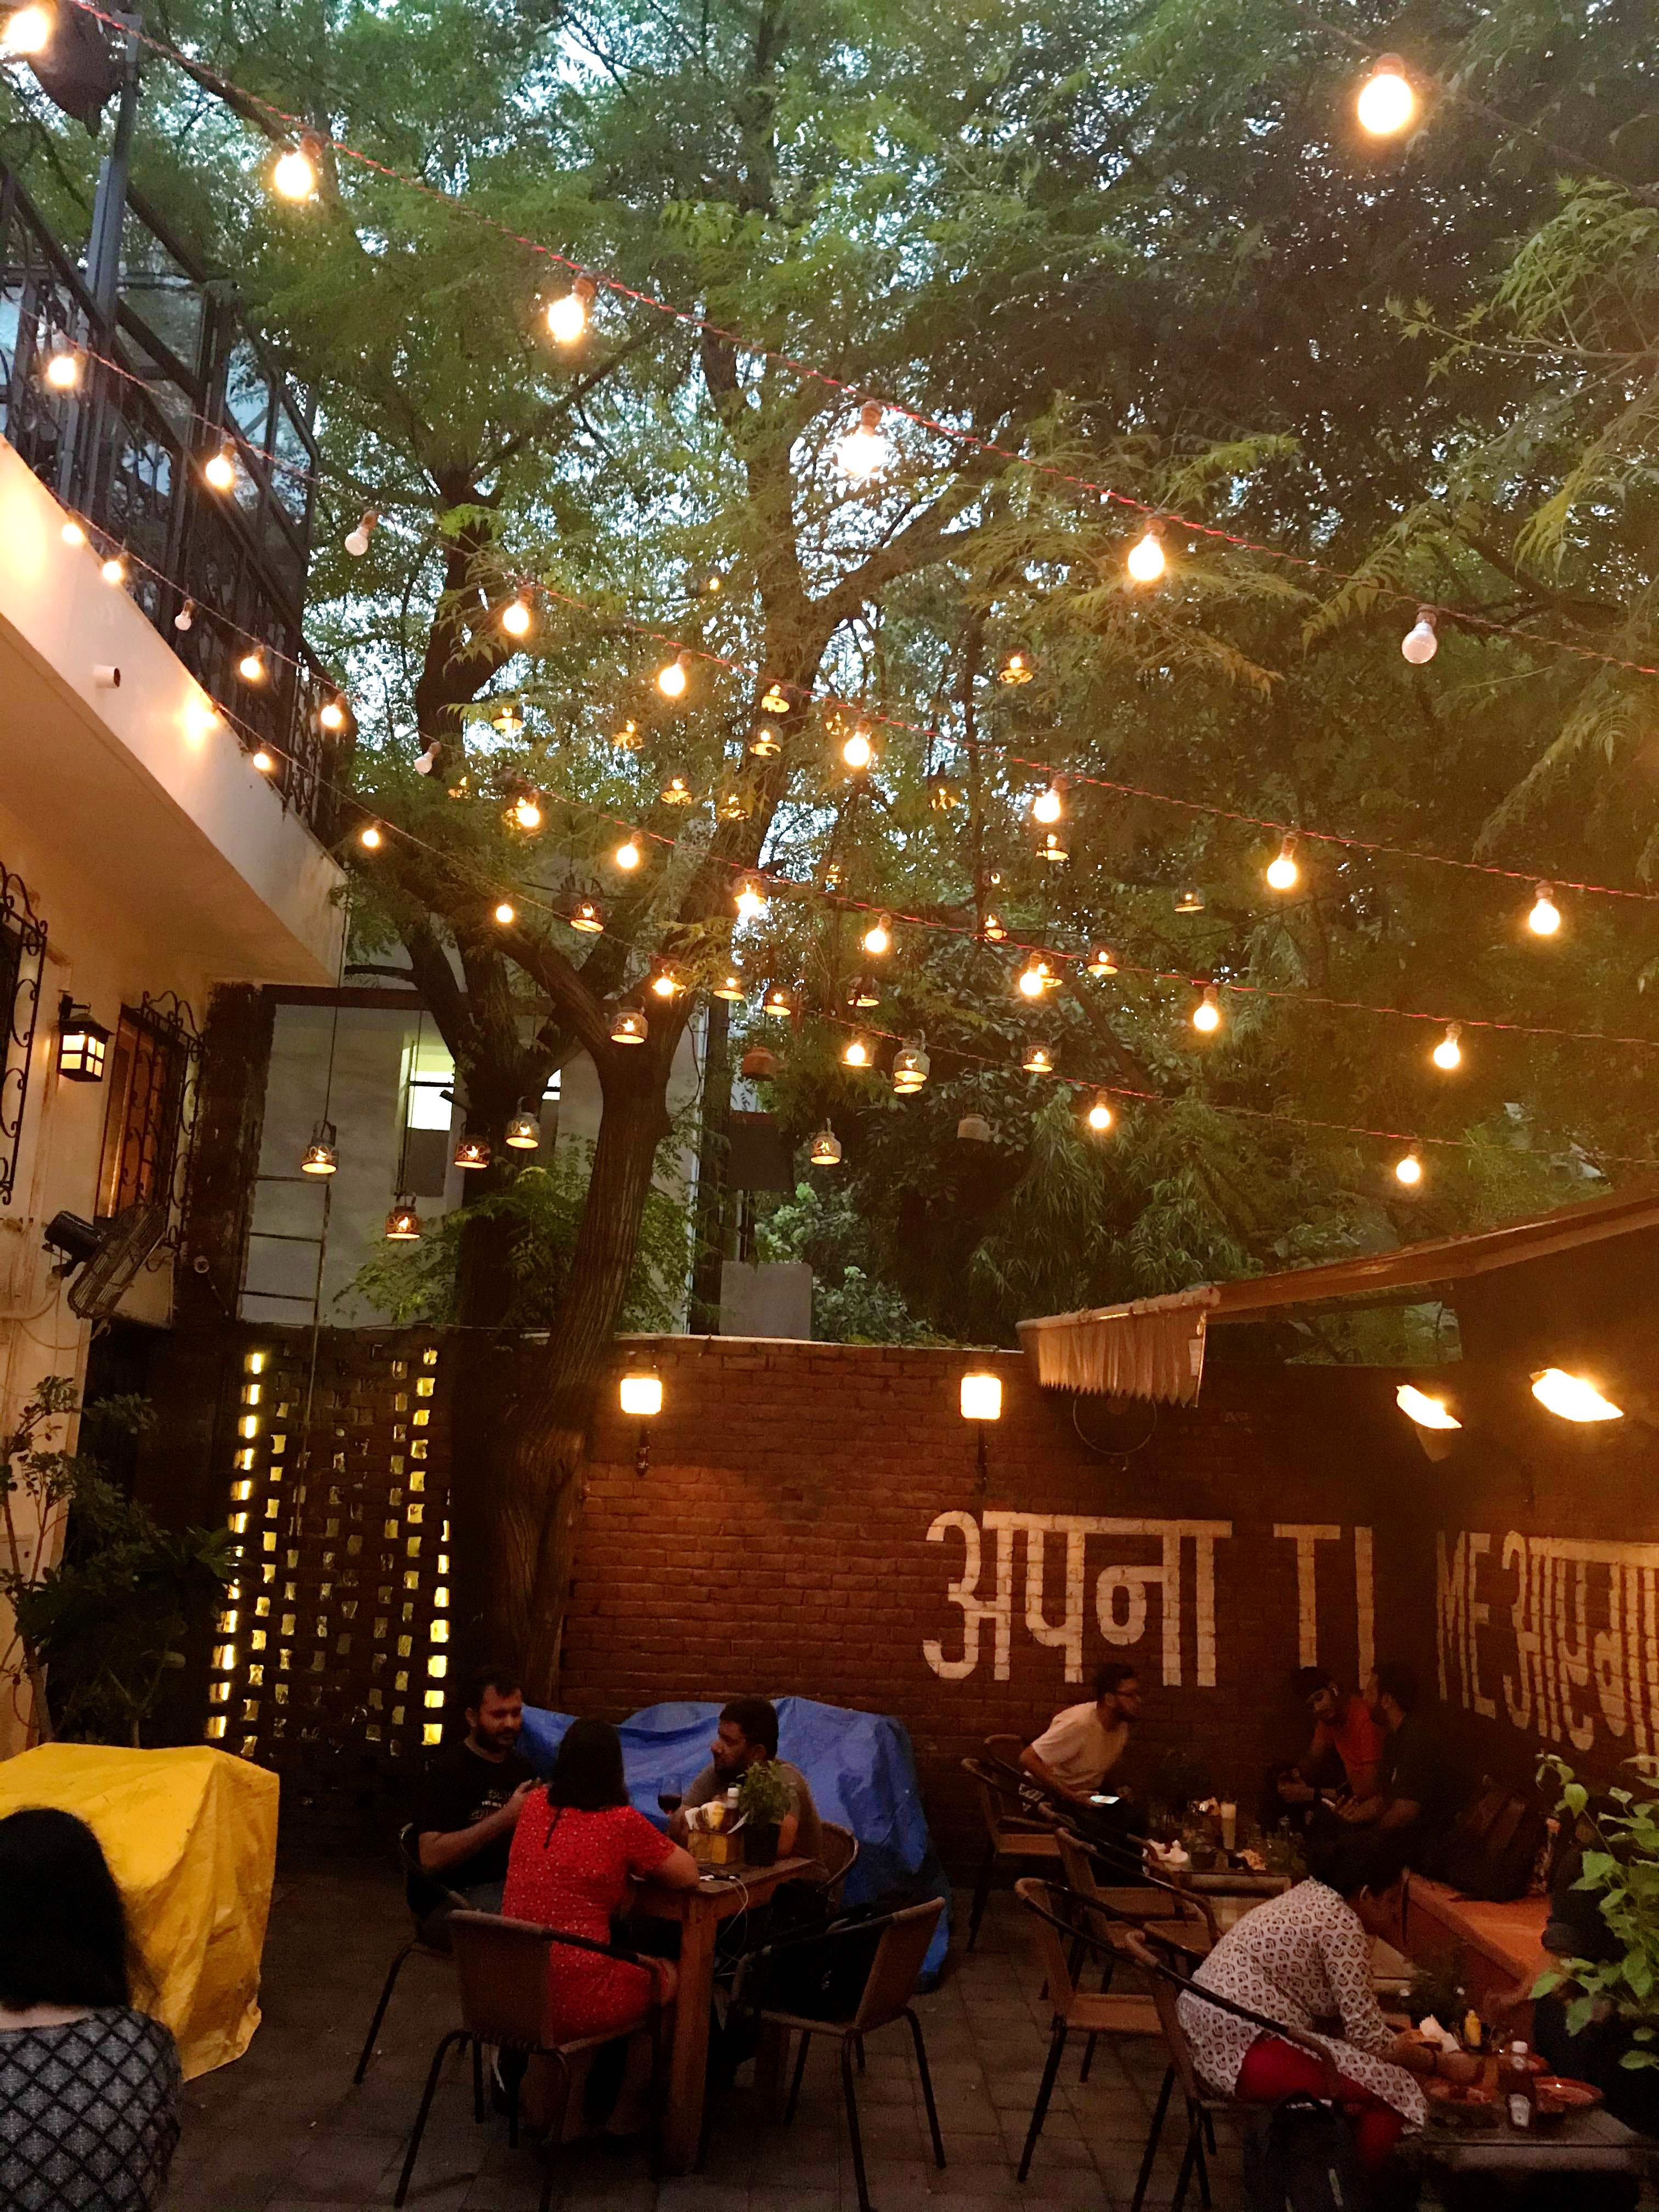 Restaurant,Lighting,Tree,Night,Table,Building,Plant,Café,Business